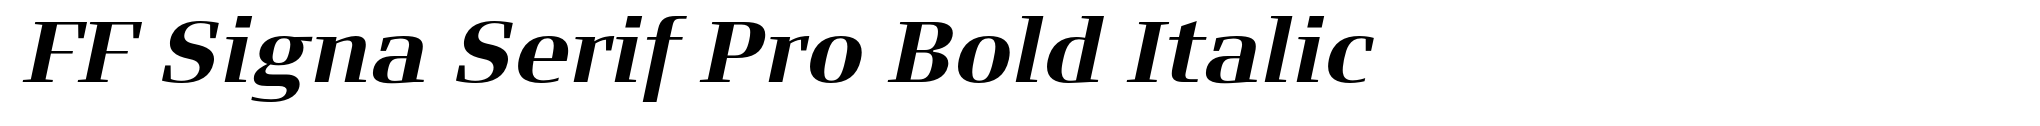 FF Signa Serif Pro Bold Italic image